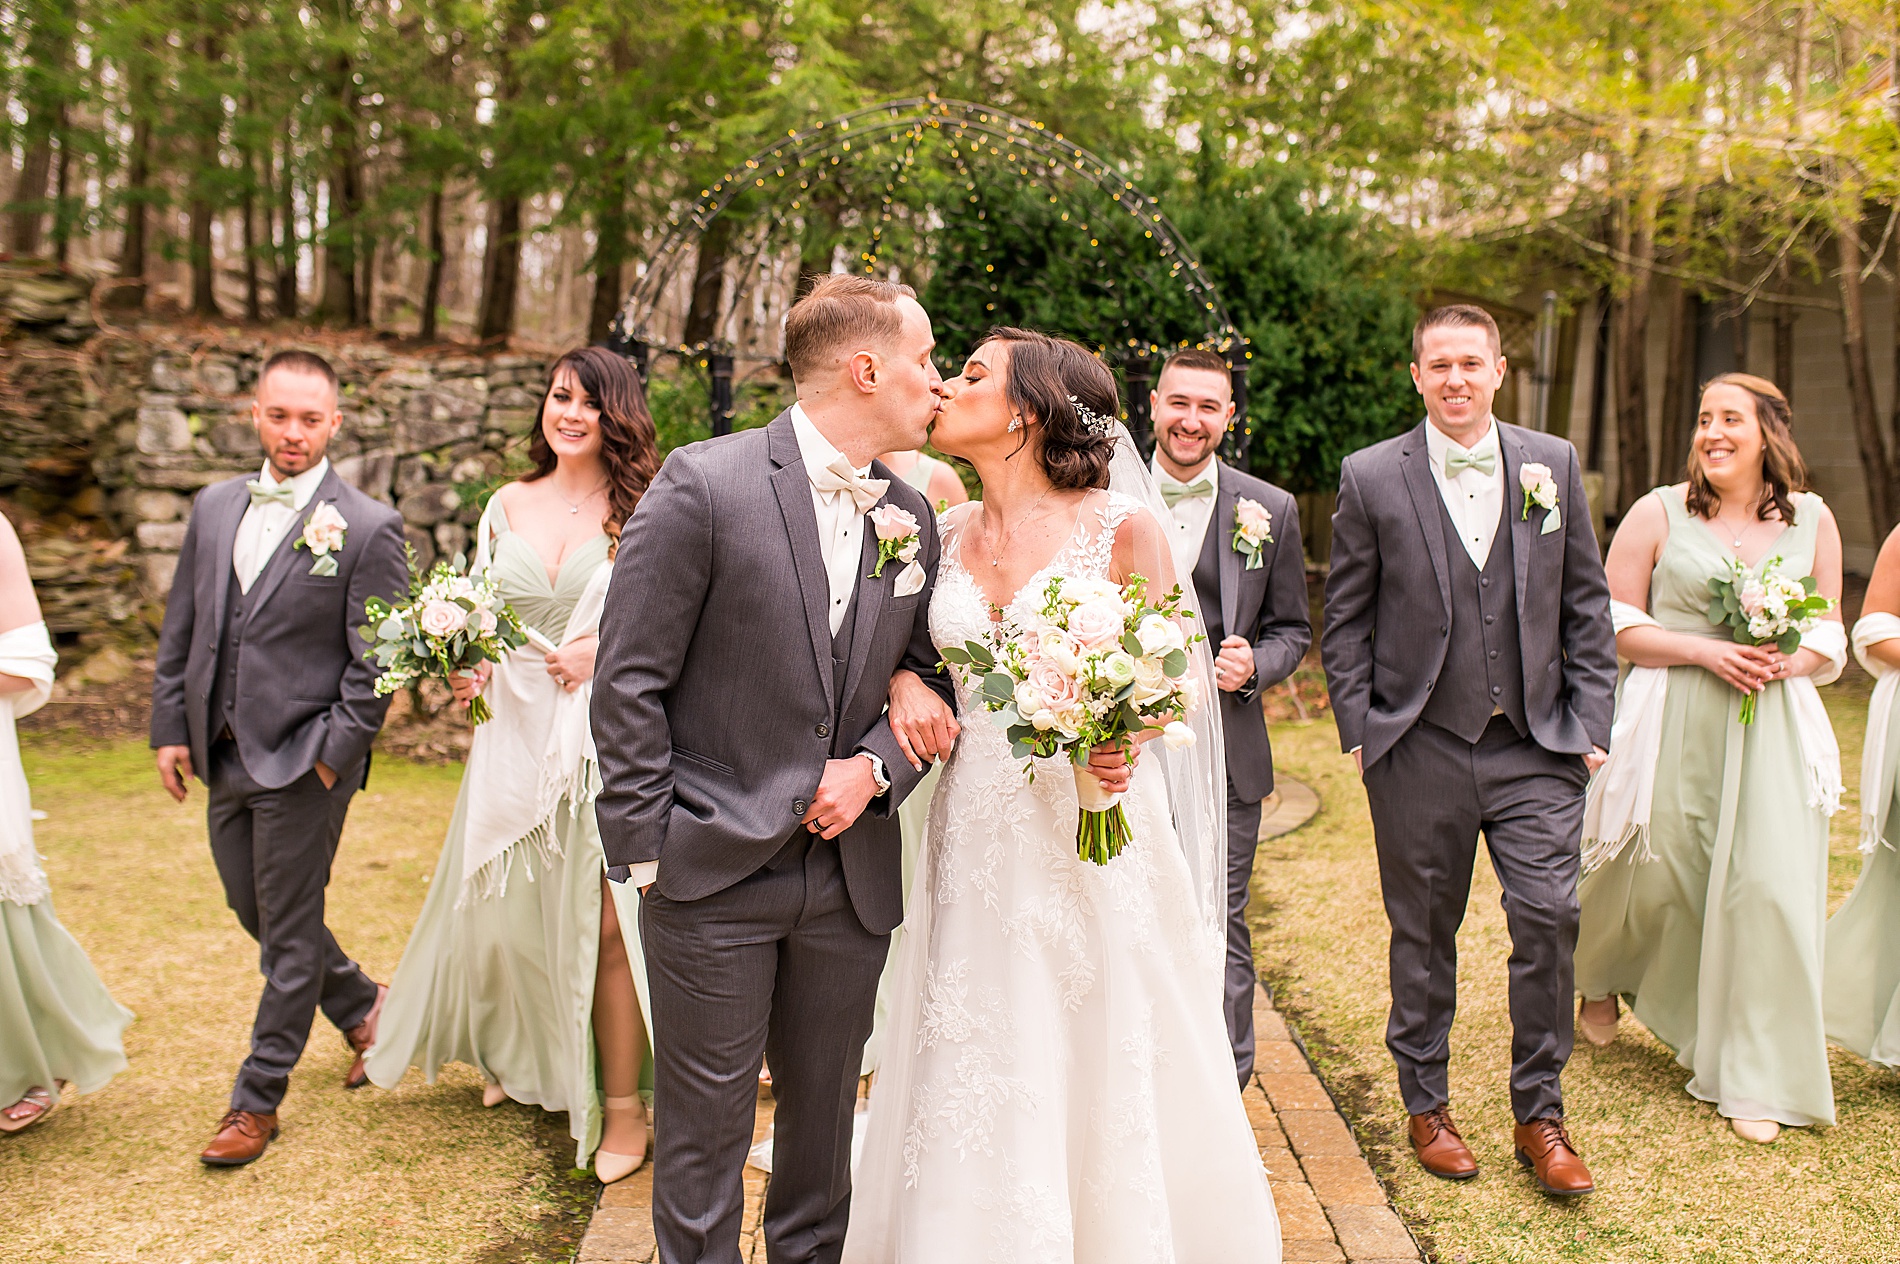 newlyweds kiss as wedding party walks behind them